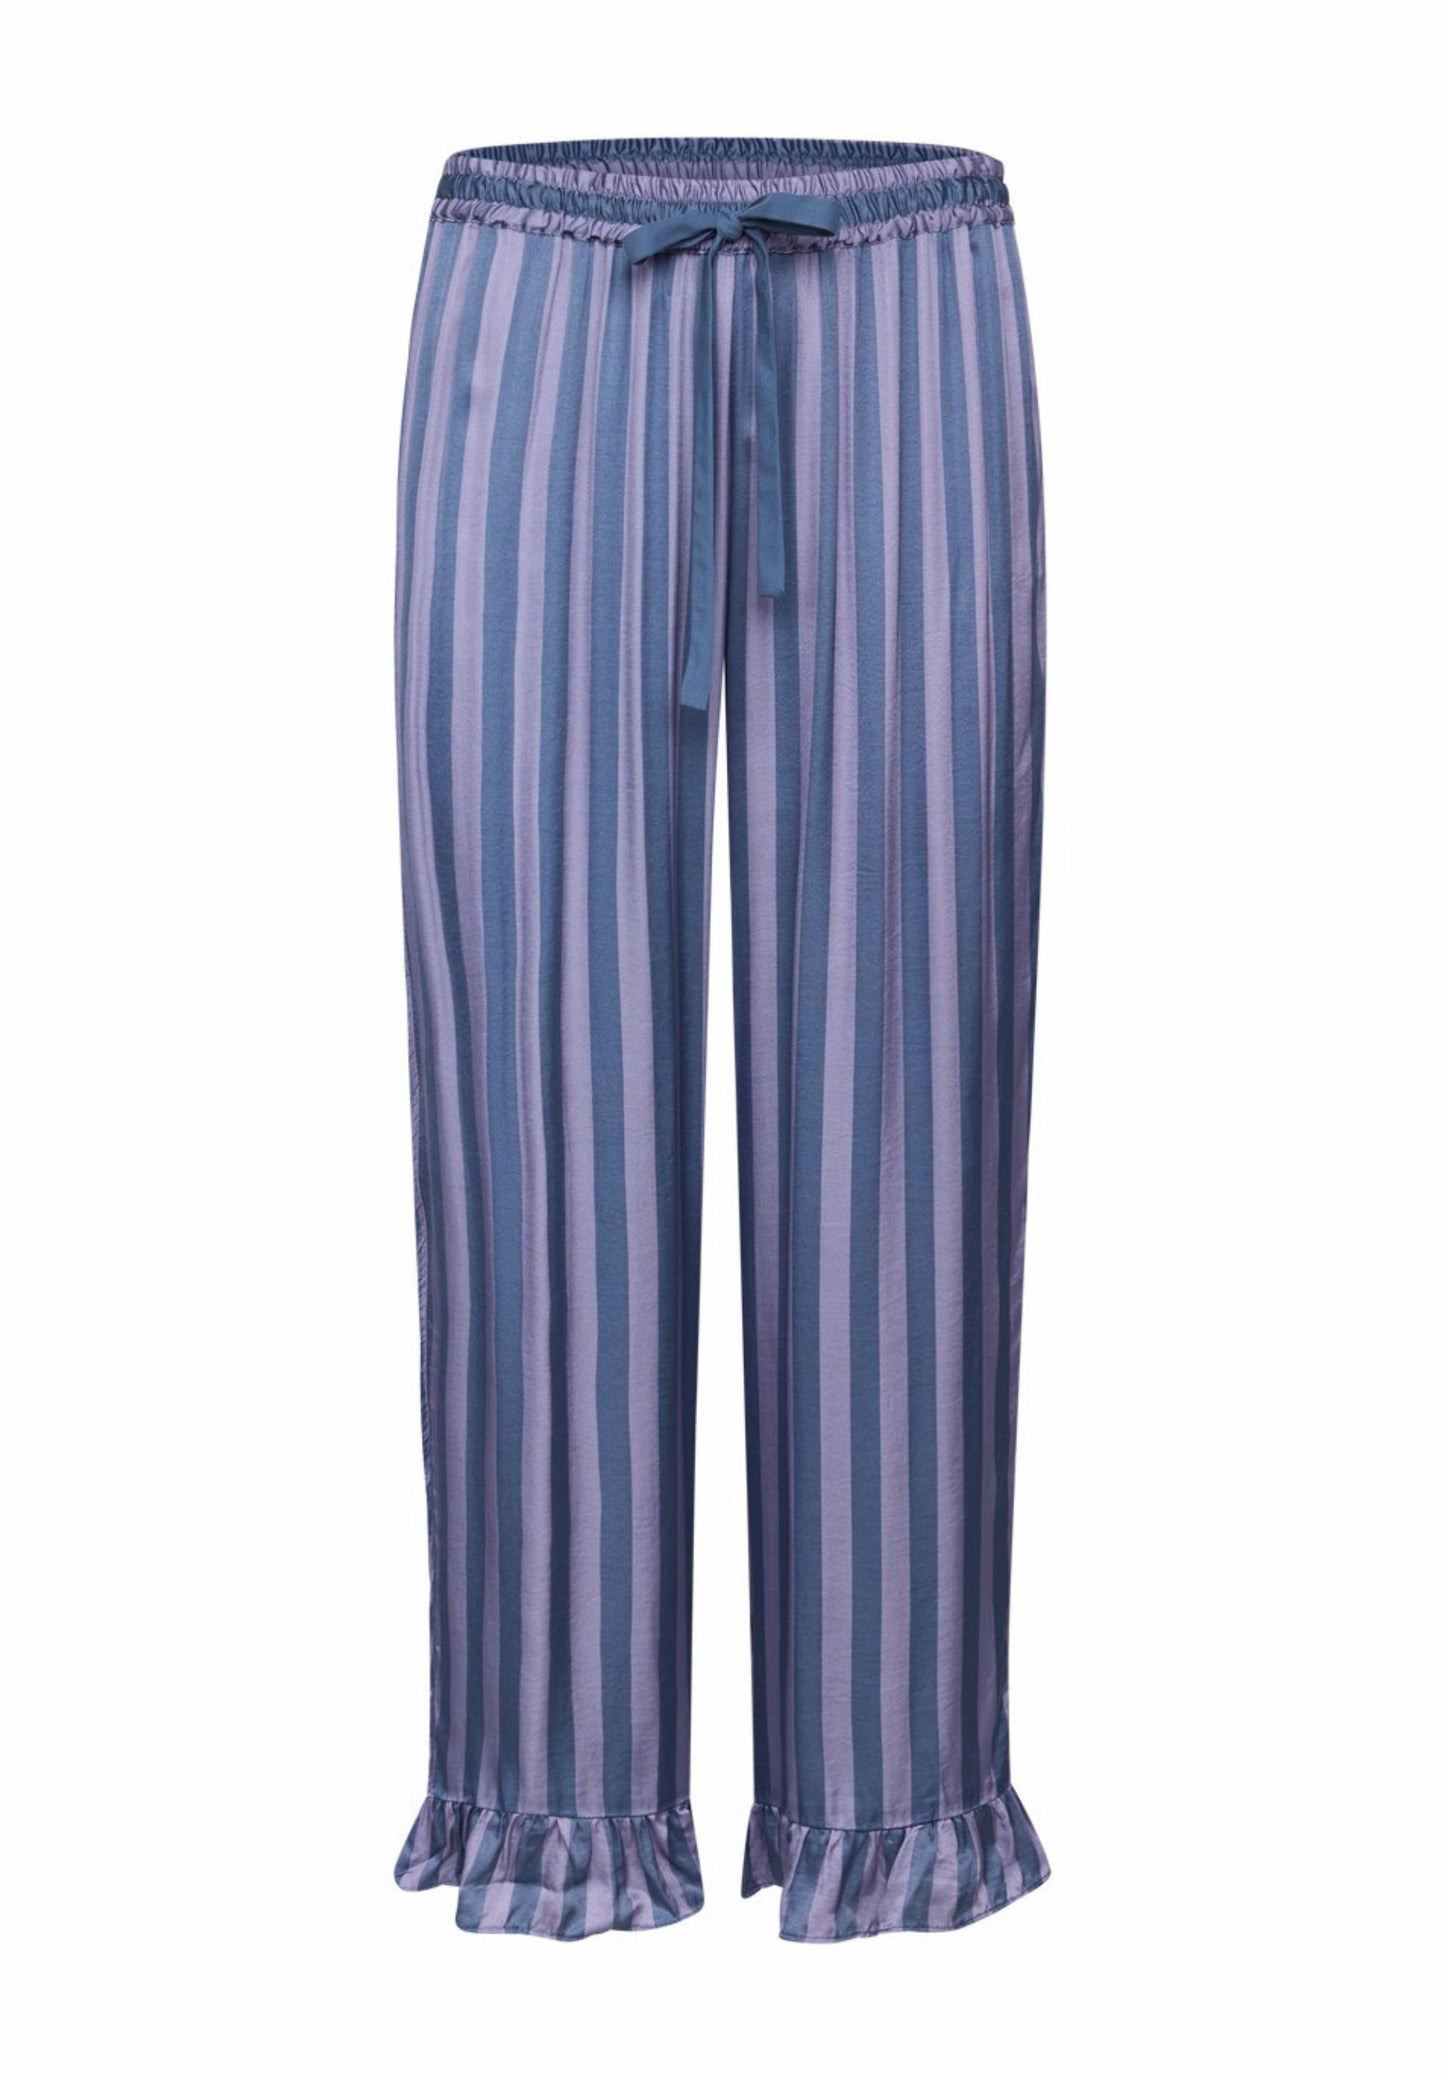 Saga Crop Pyjamasbukser Bijou Blue